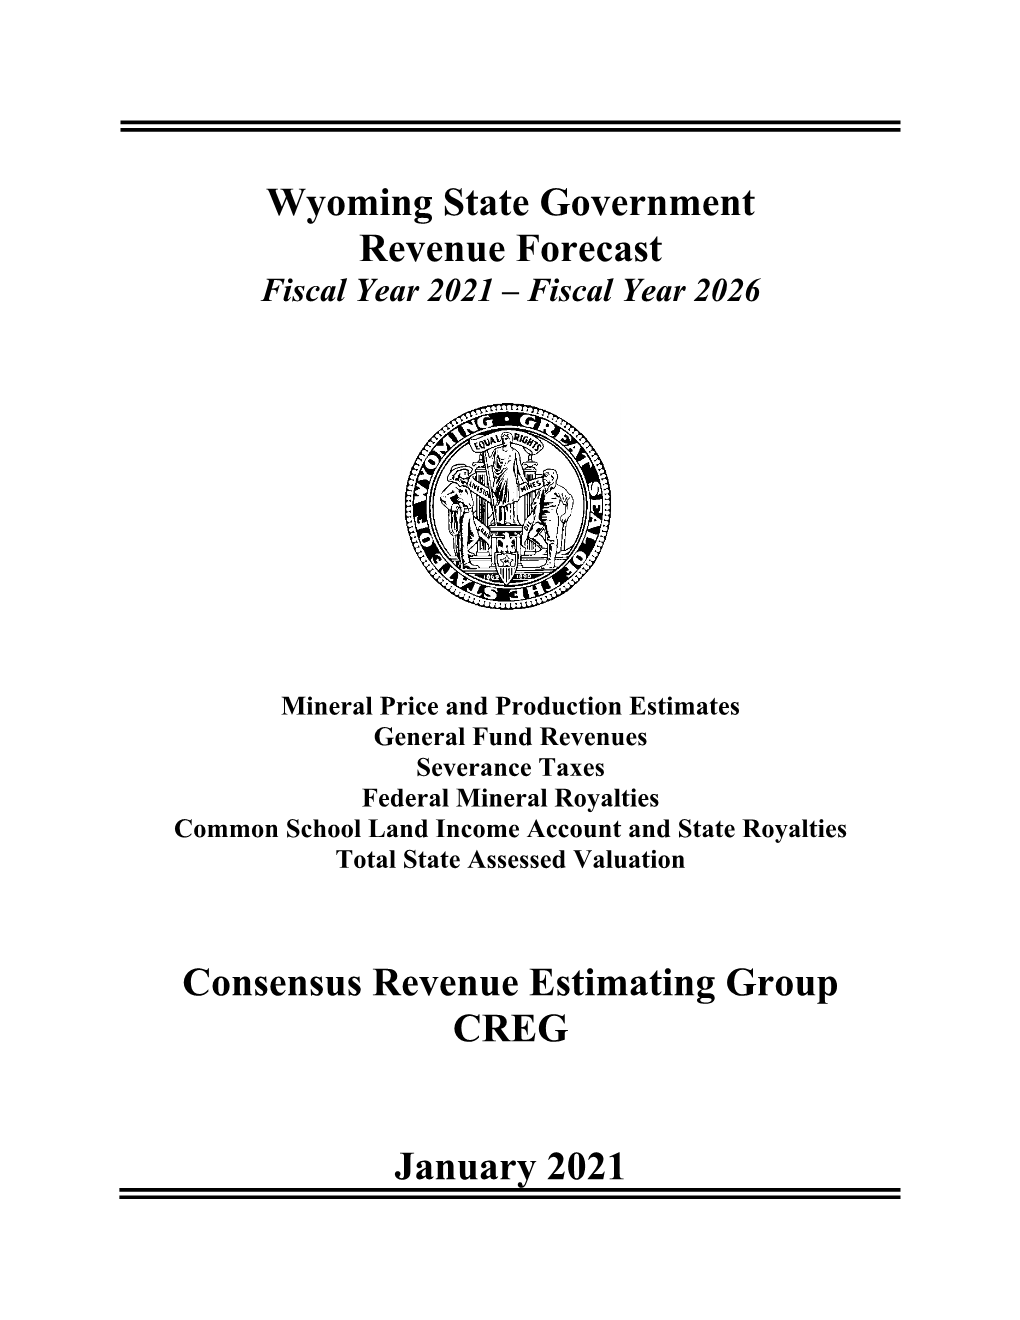 Wyoming State Government Revenue Forecast Consensus Revenue Estimating Group CREG January 2021